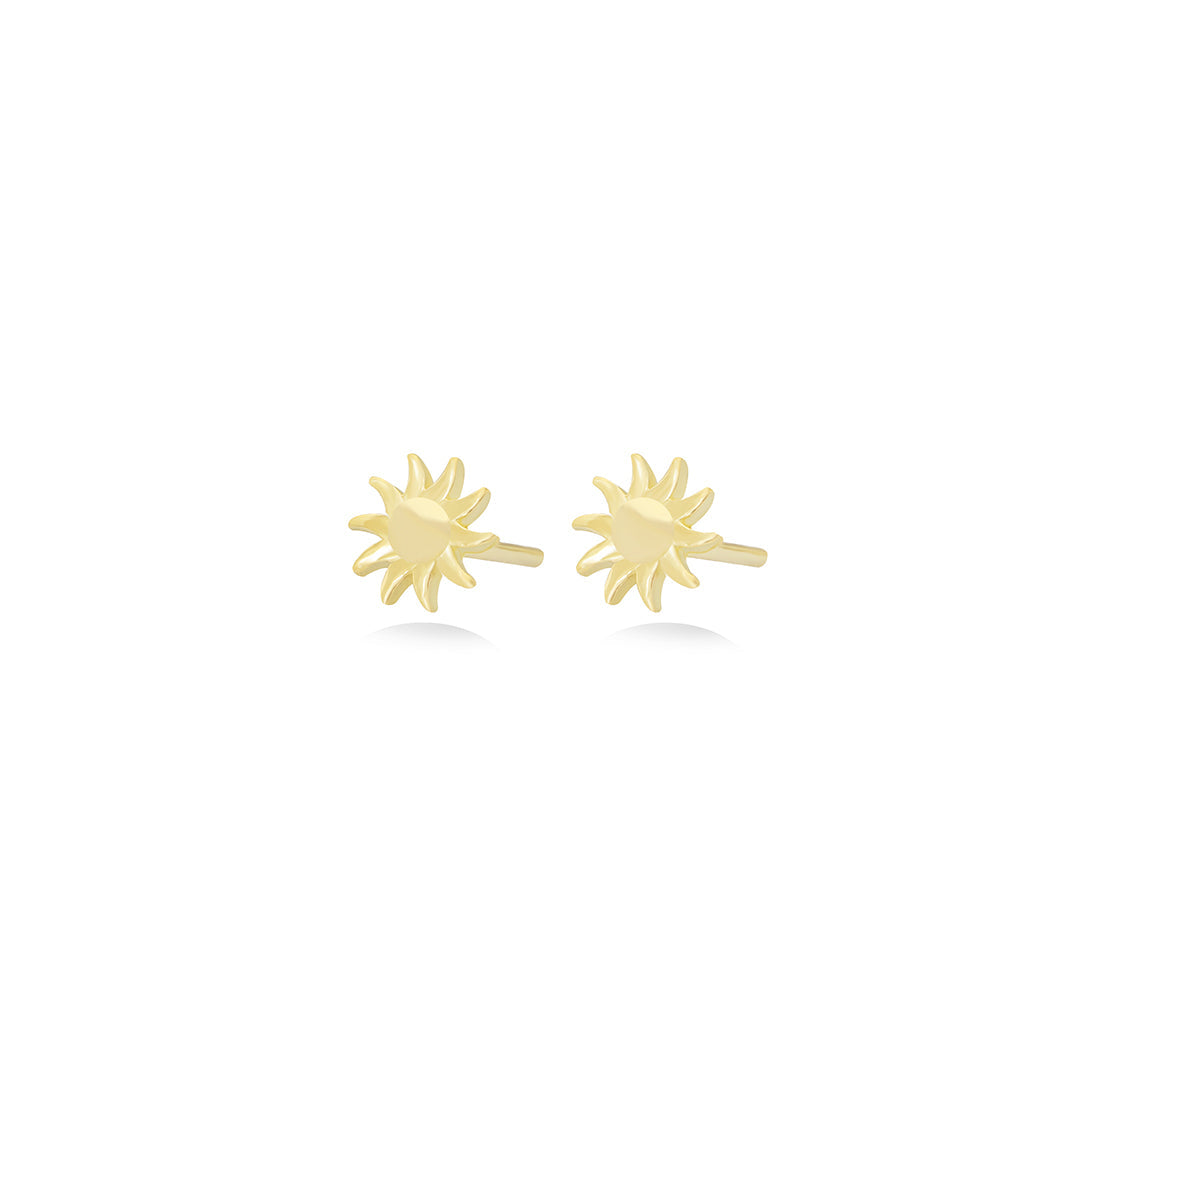 Sunny Sun Stud Earrings in 18k Yellow Gold